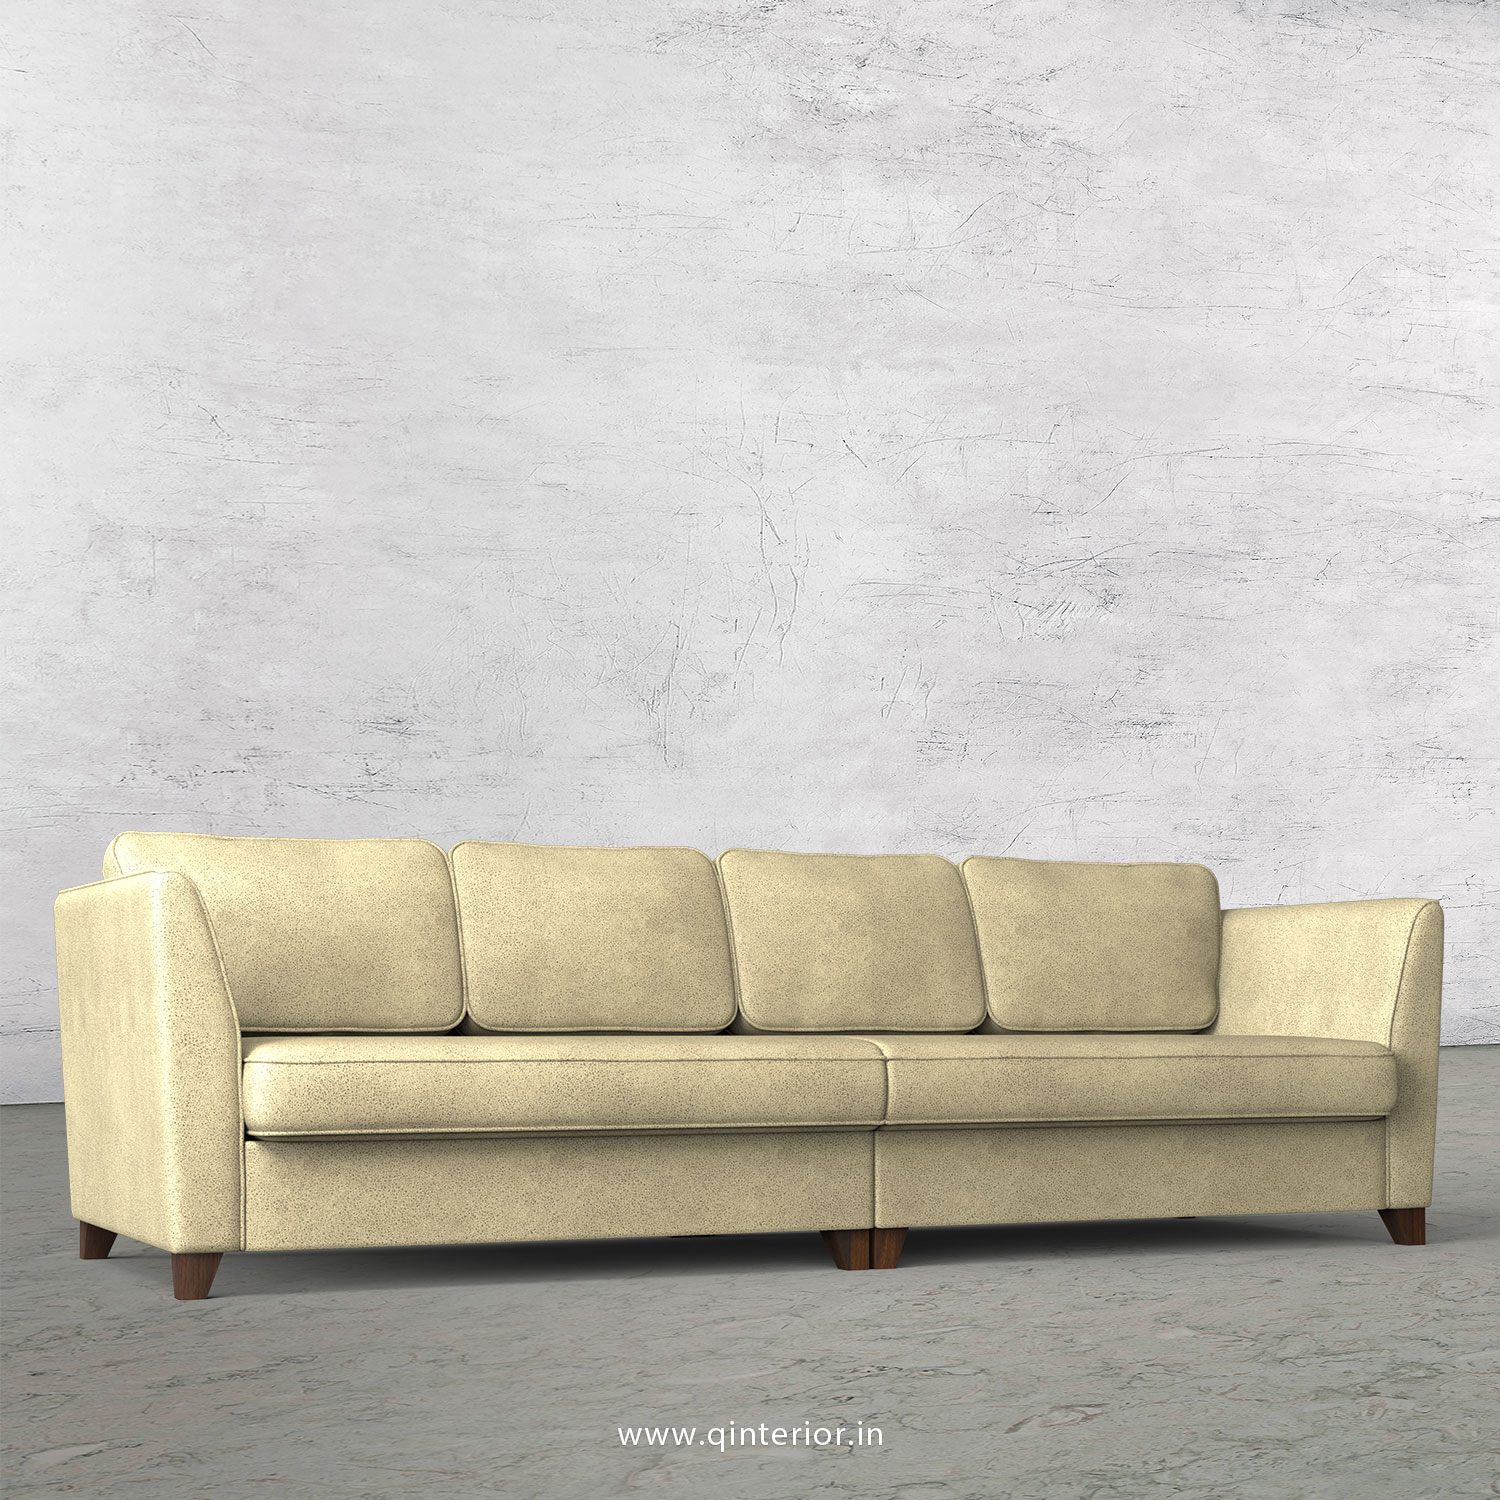 Kingstone 4 Seater Sofa in Fab Leather Fabric - SFA004 FL10